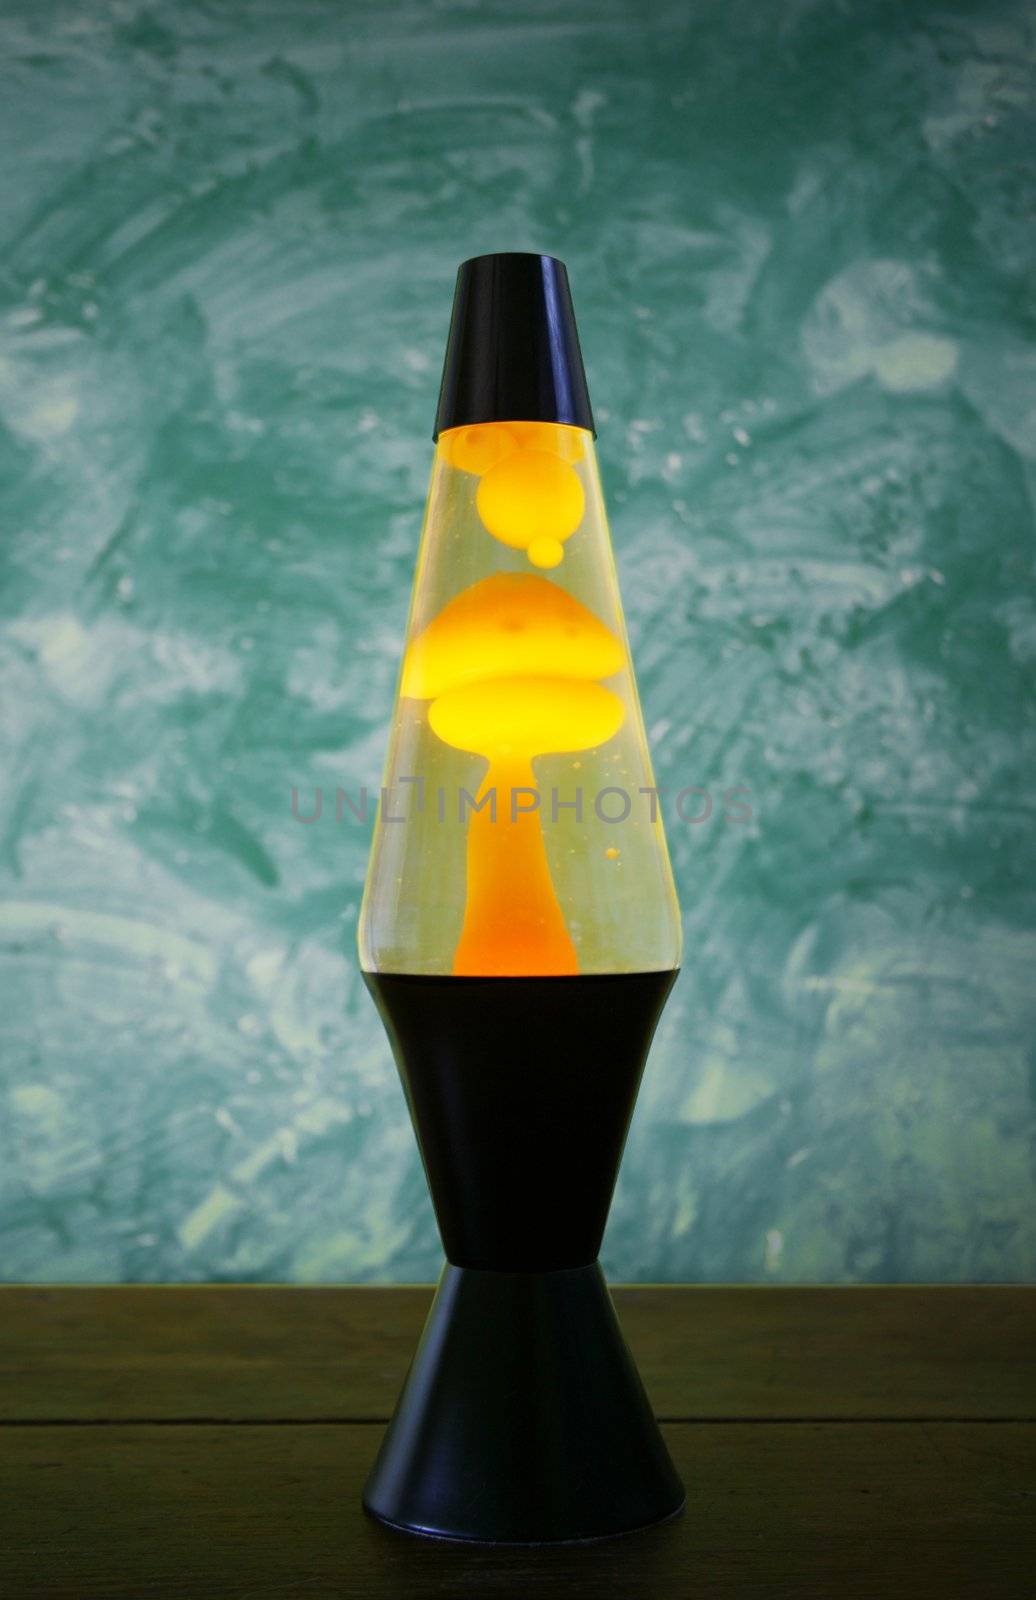 Lava Lamp by Creatista